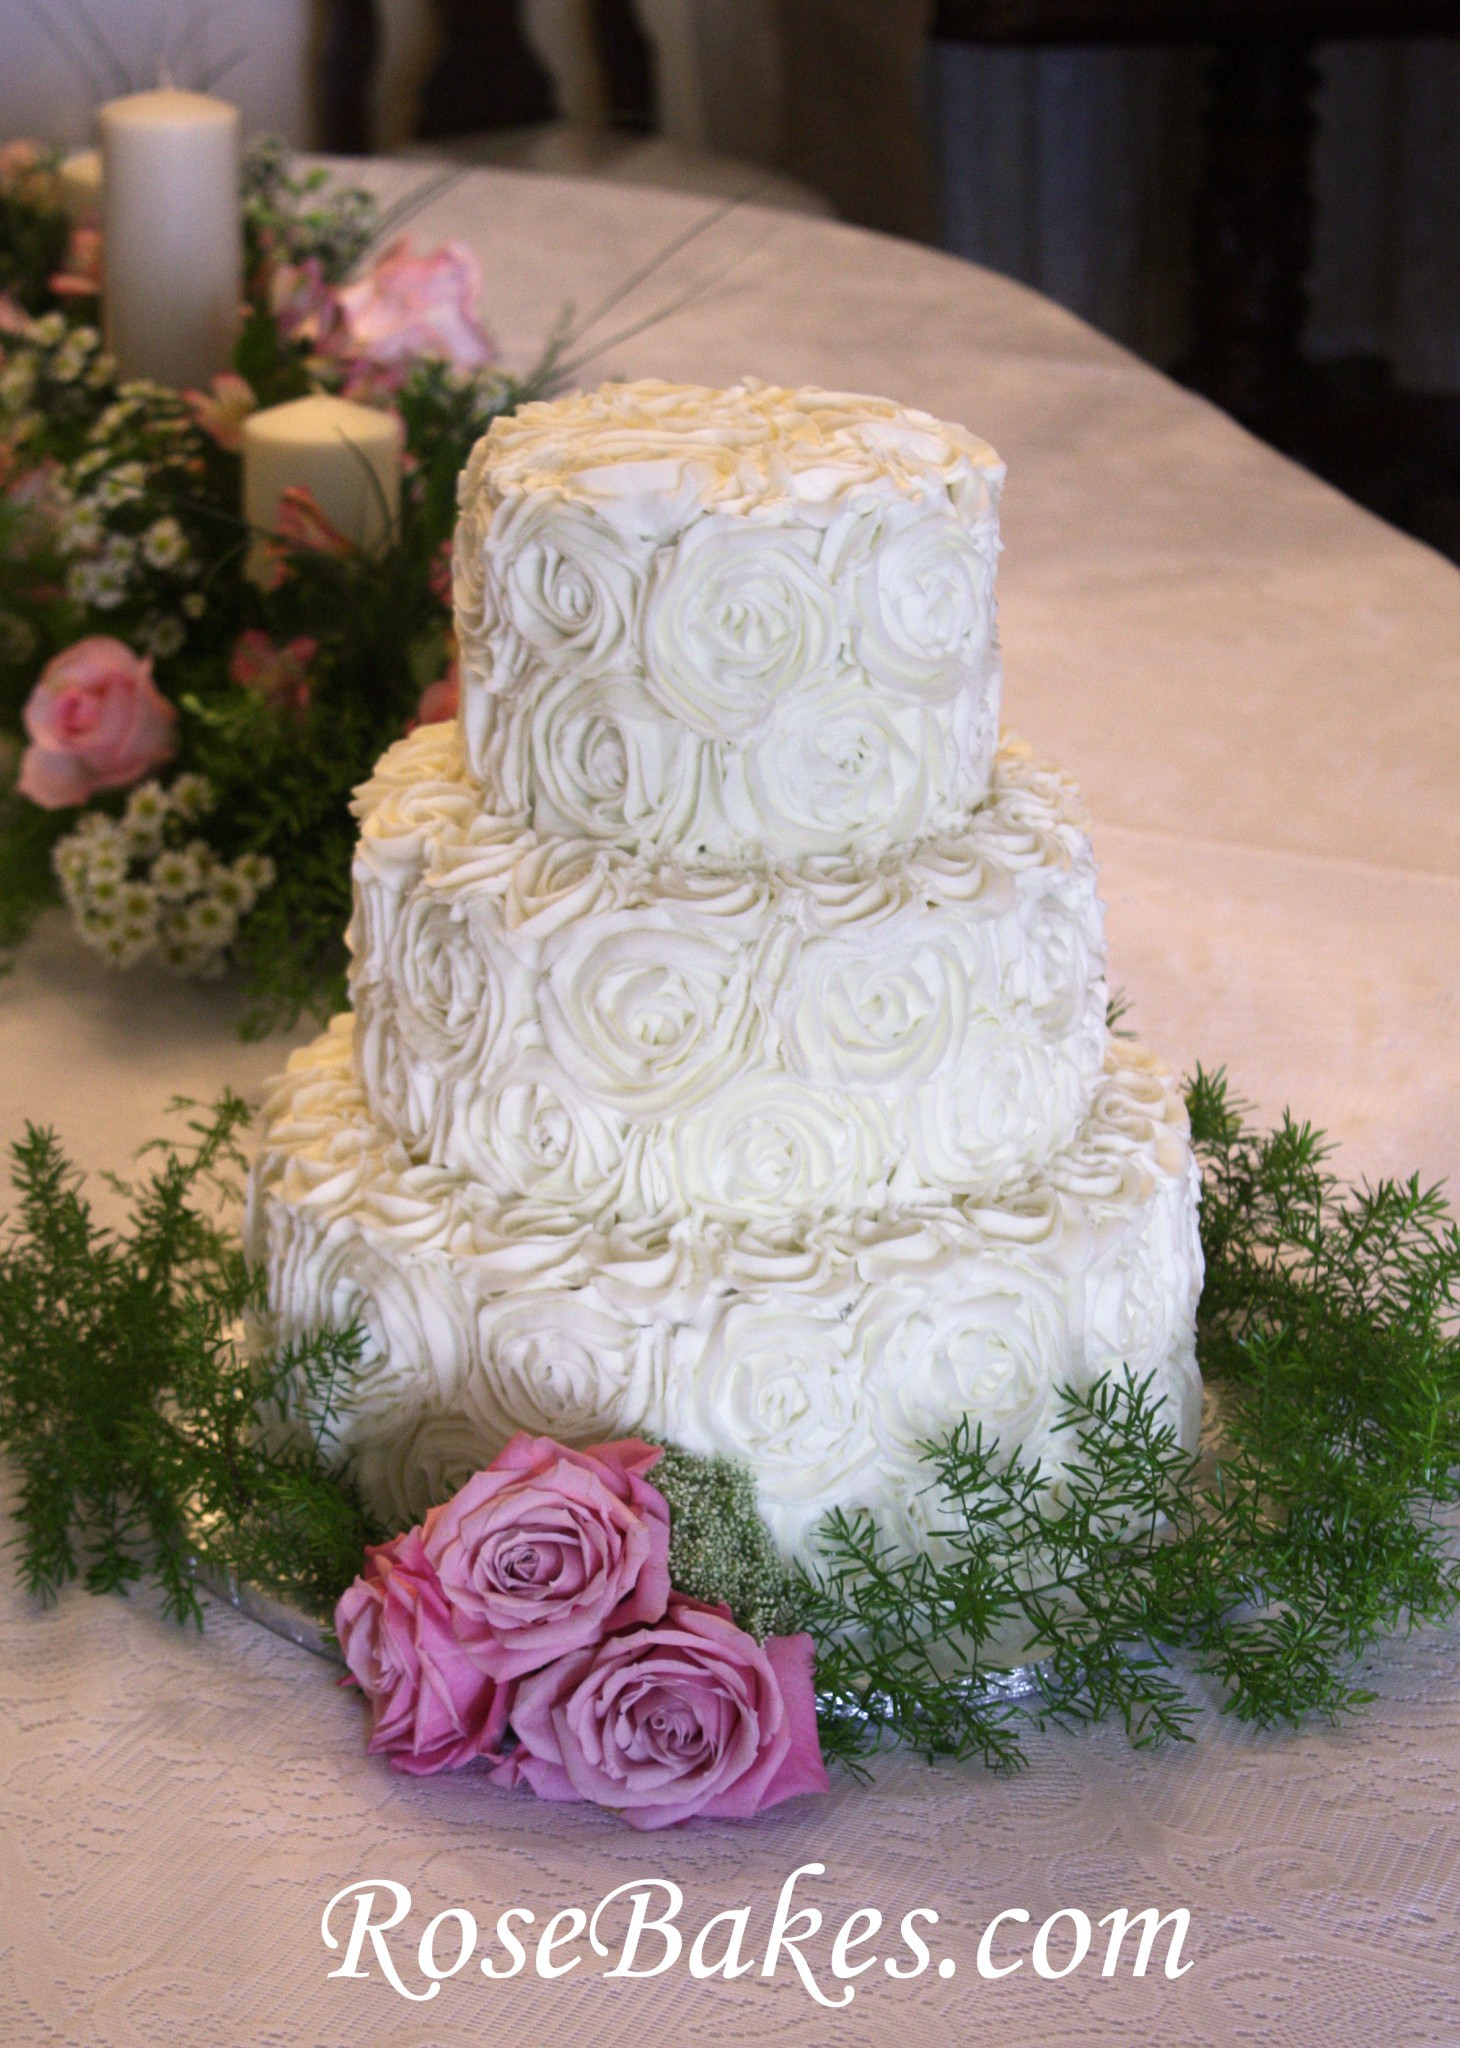 Wedding Cakes Buttercream
 Buttercream Roses Wedding Cake with Pink Roses